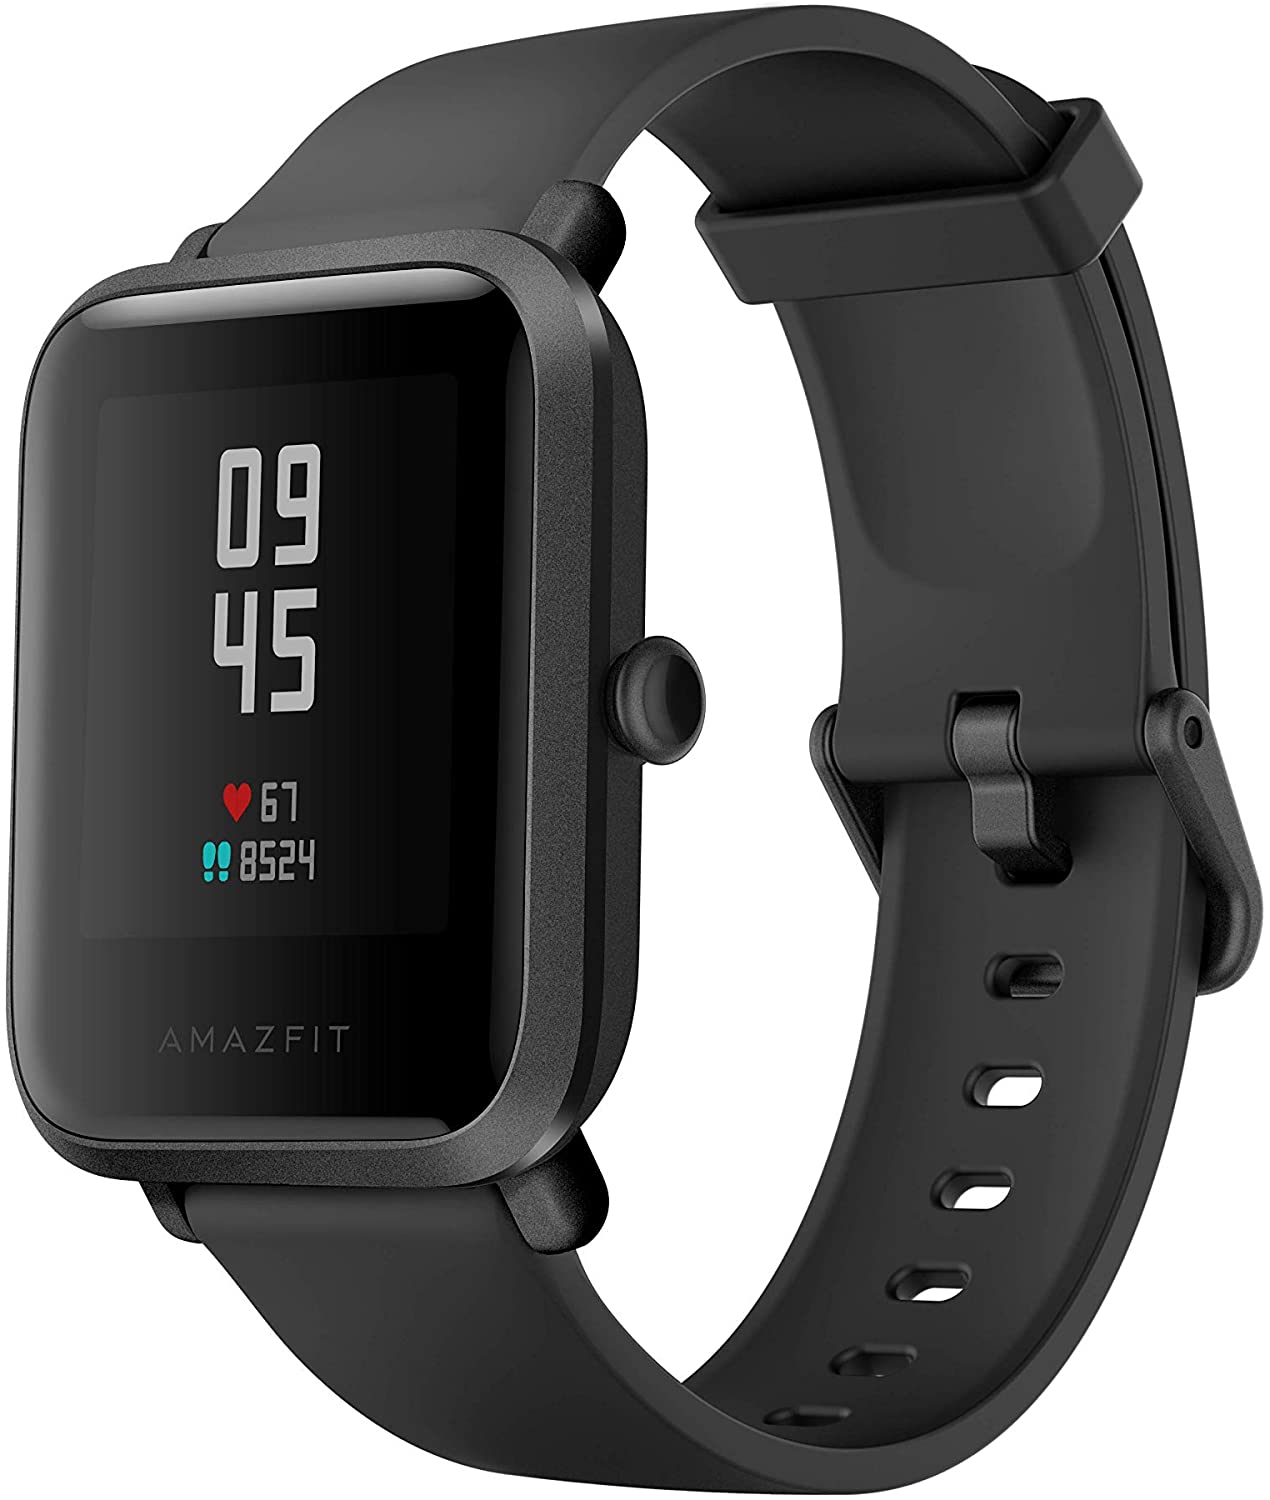 Amazfit Bip S Reloj Smartwatch - Pantalla Tactil 1.28\" - Bluetooth 5.0 - Resistencia al Agua 5 ATM - Color Negro